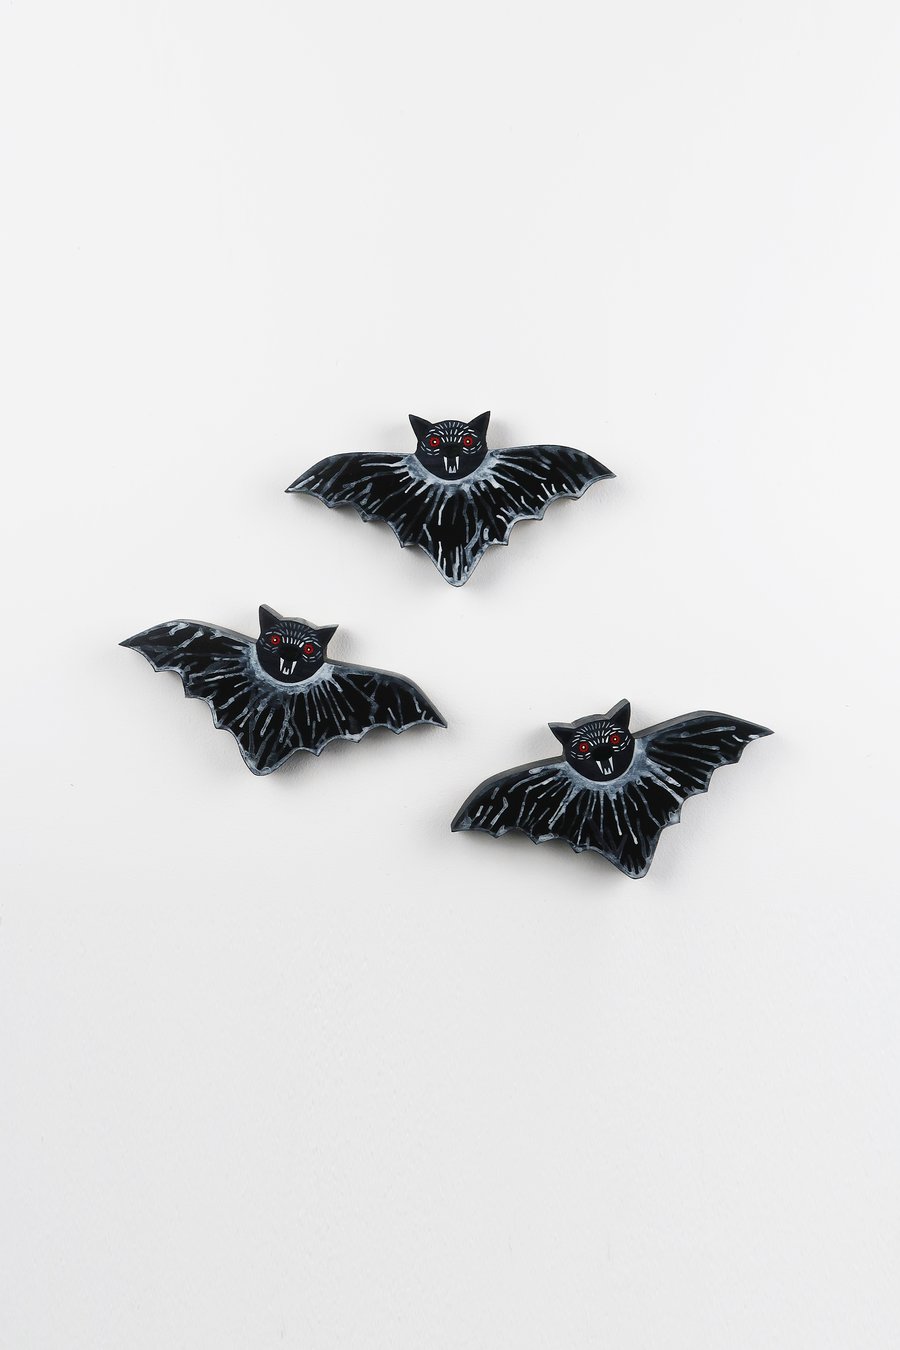 flying bats wall hangings, set of 3, spooky, creepy cute halloween bat decor 